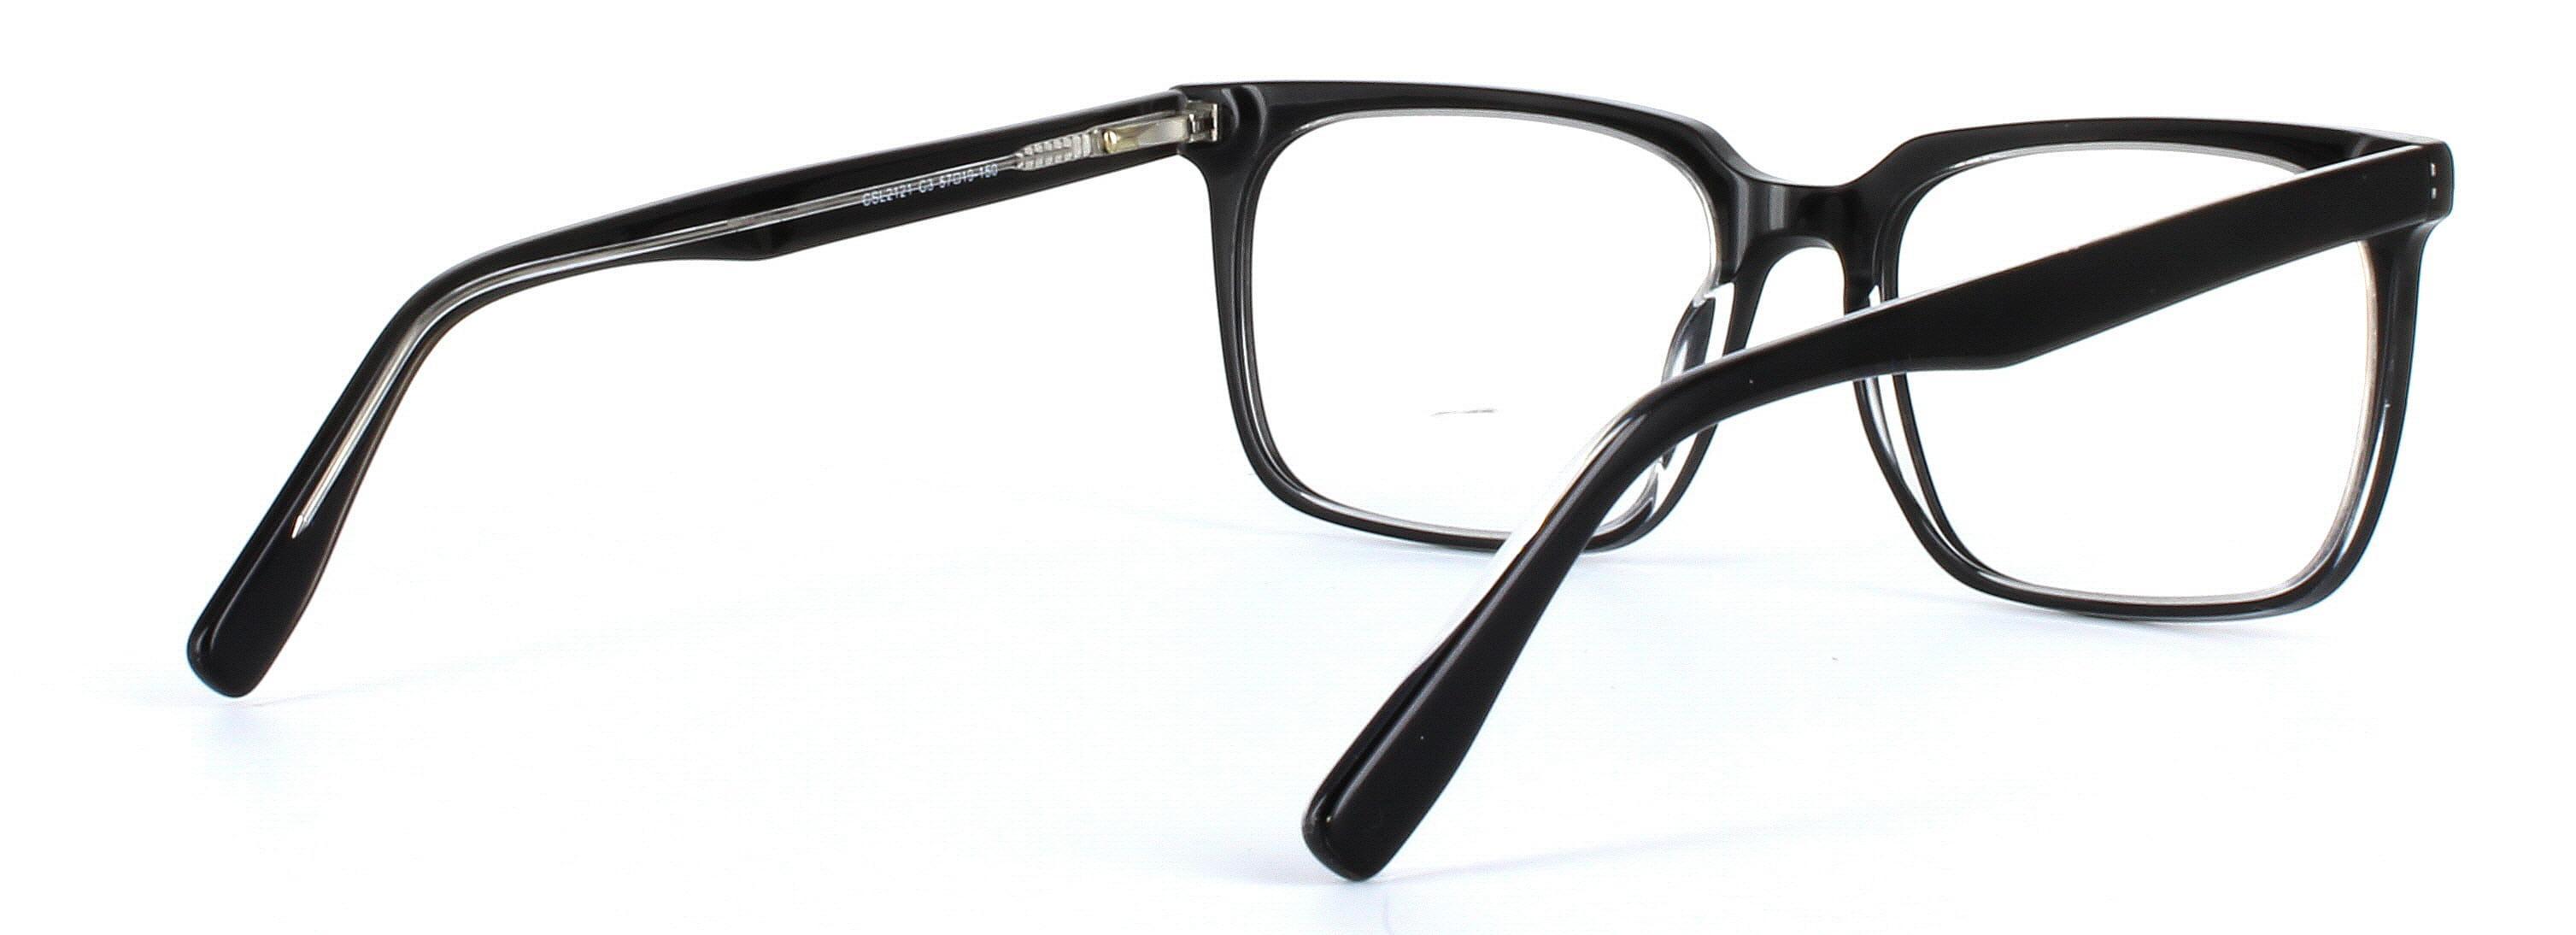 Coombe Black Full Rim Rectangular Acetate Glasses - Image View 4